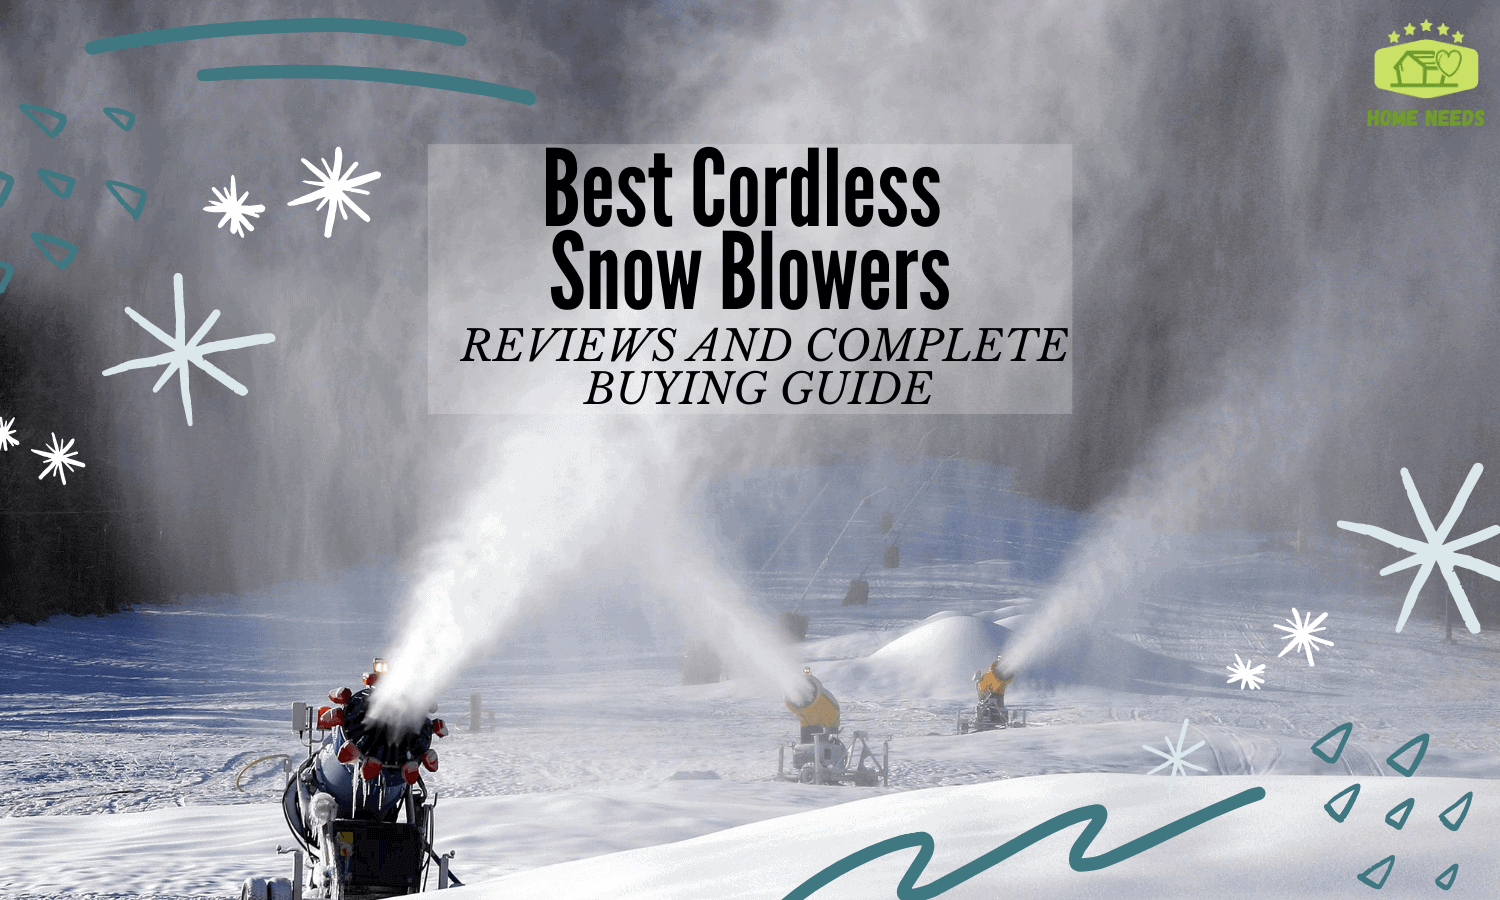 Best Cordless Snow Blowers